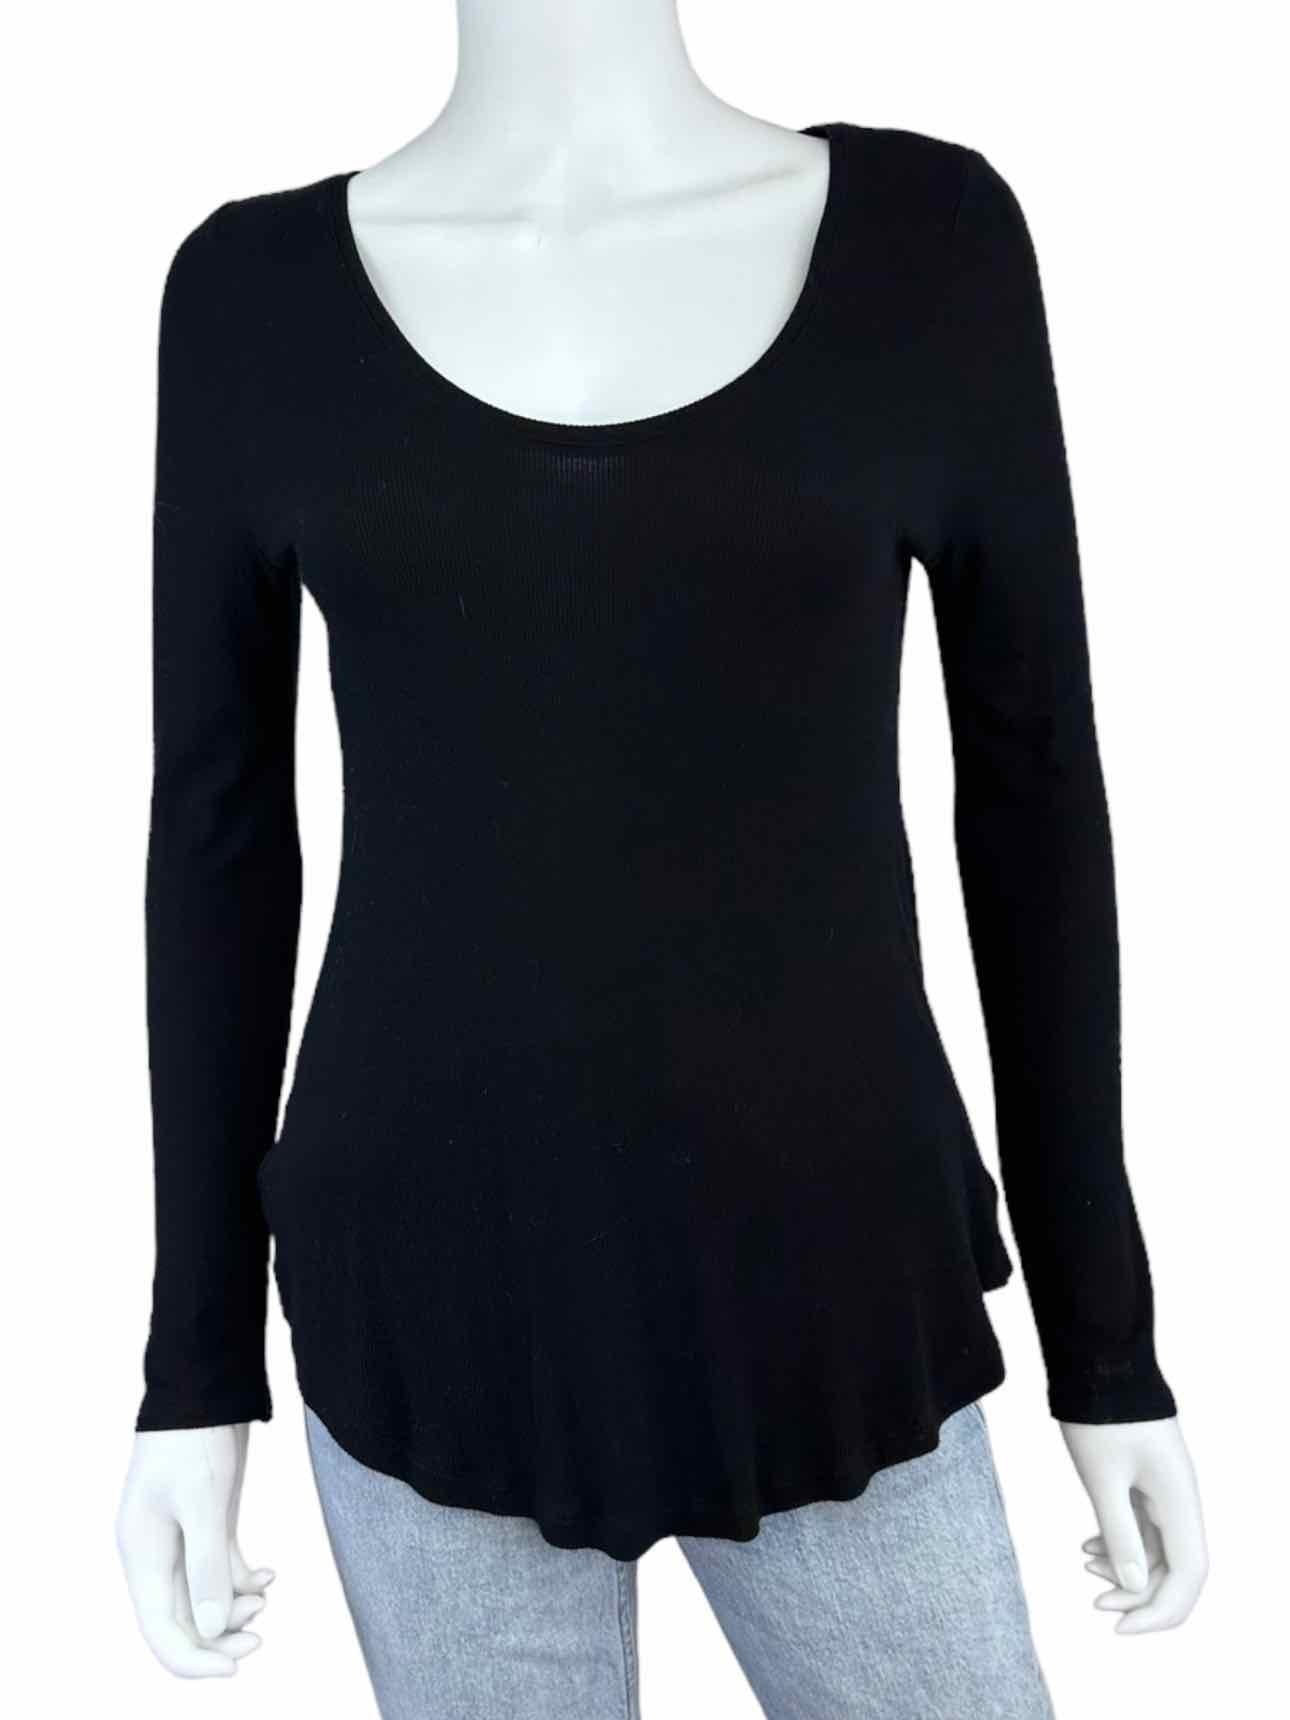 WHITE + WARREN Black Ribbed Stretch Knit Top Size S